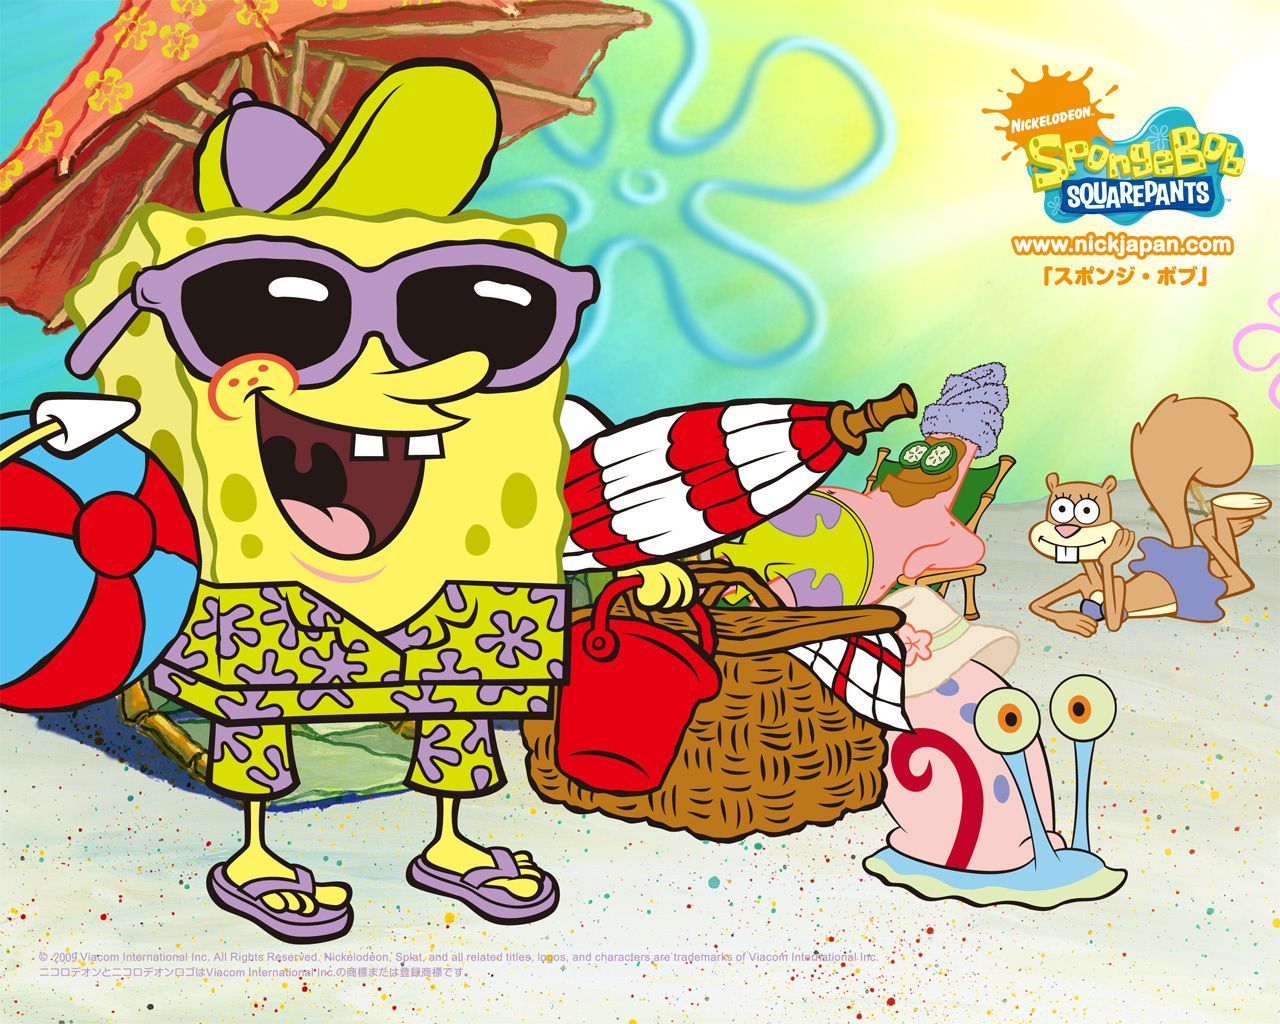 Spongebob Squarepants Wallpaper: Summer. Spongebob drawings, Spongebob, Spongebob squarepants cartoons